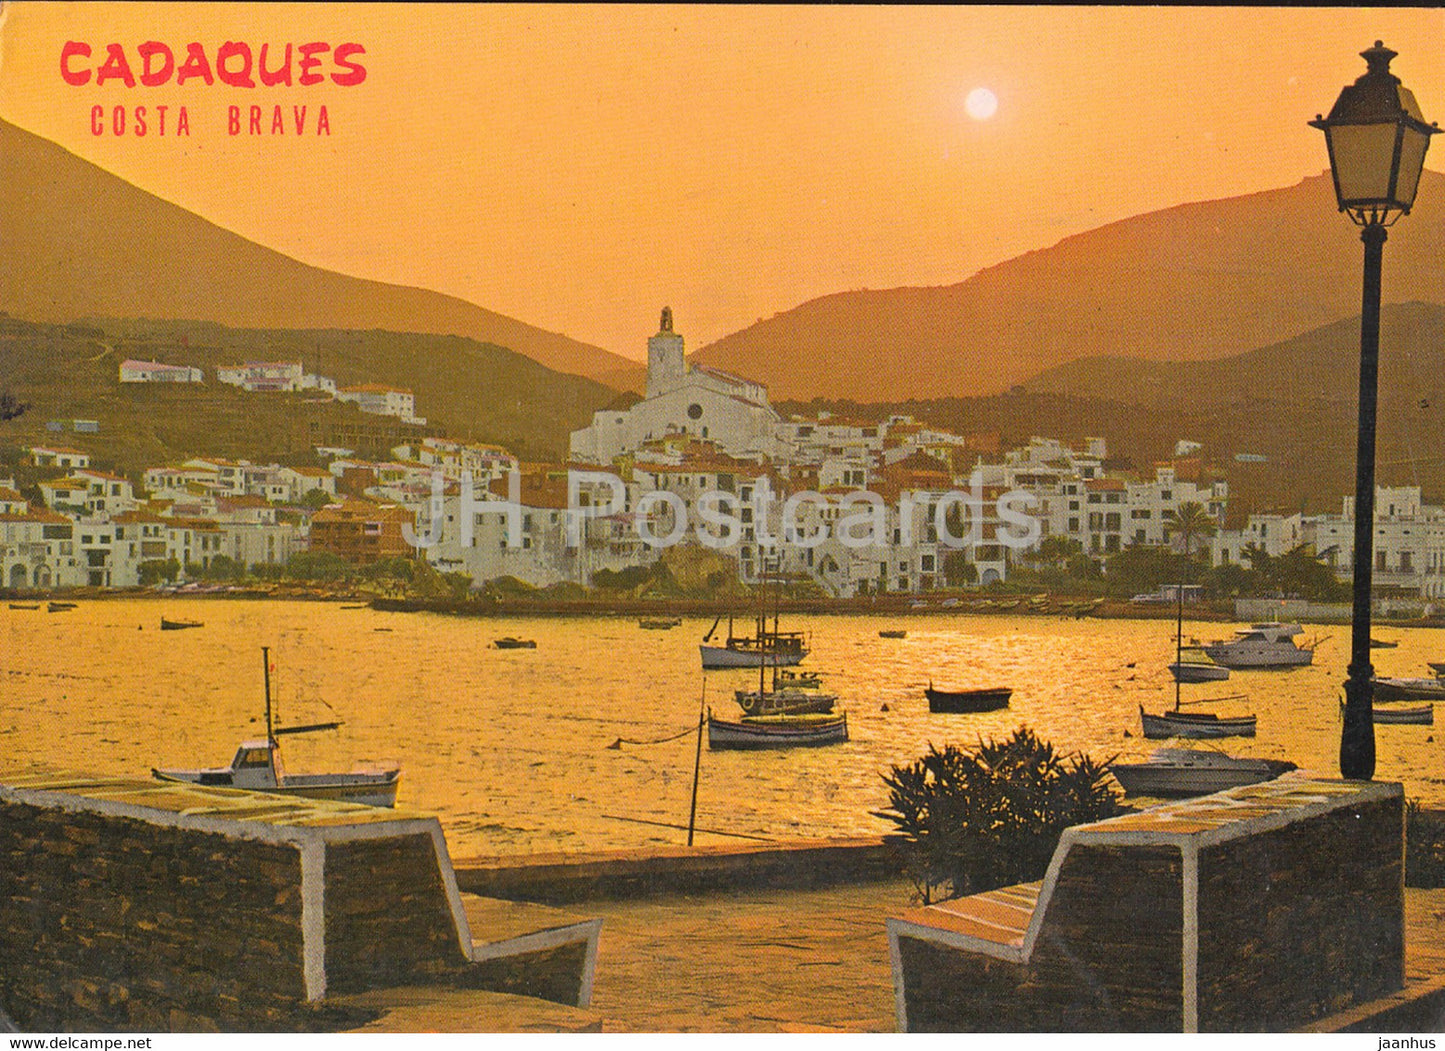 Cadaques - Costa Brava - Bello Atardecer - Beautiful Sunset - 1978 - Spain - used - JH Postcards